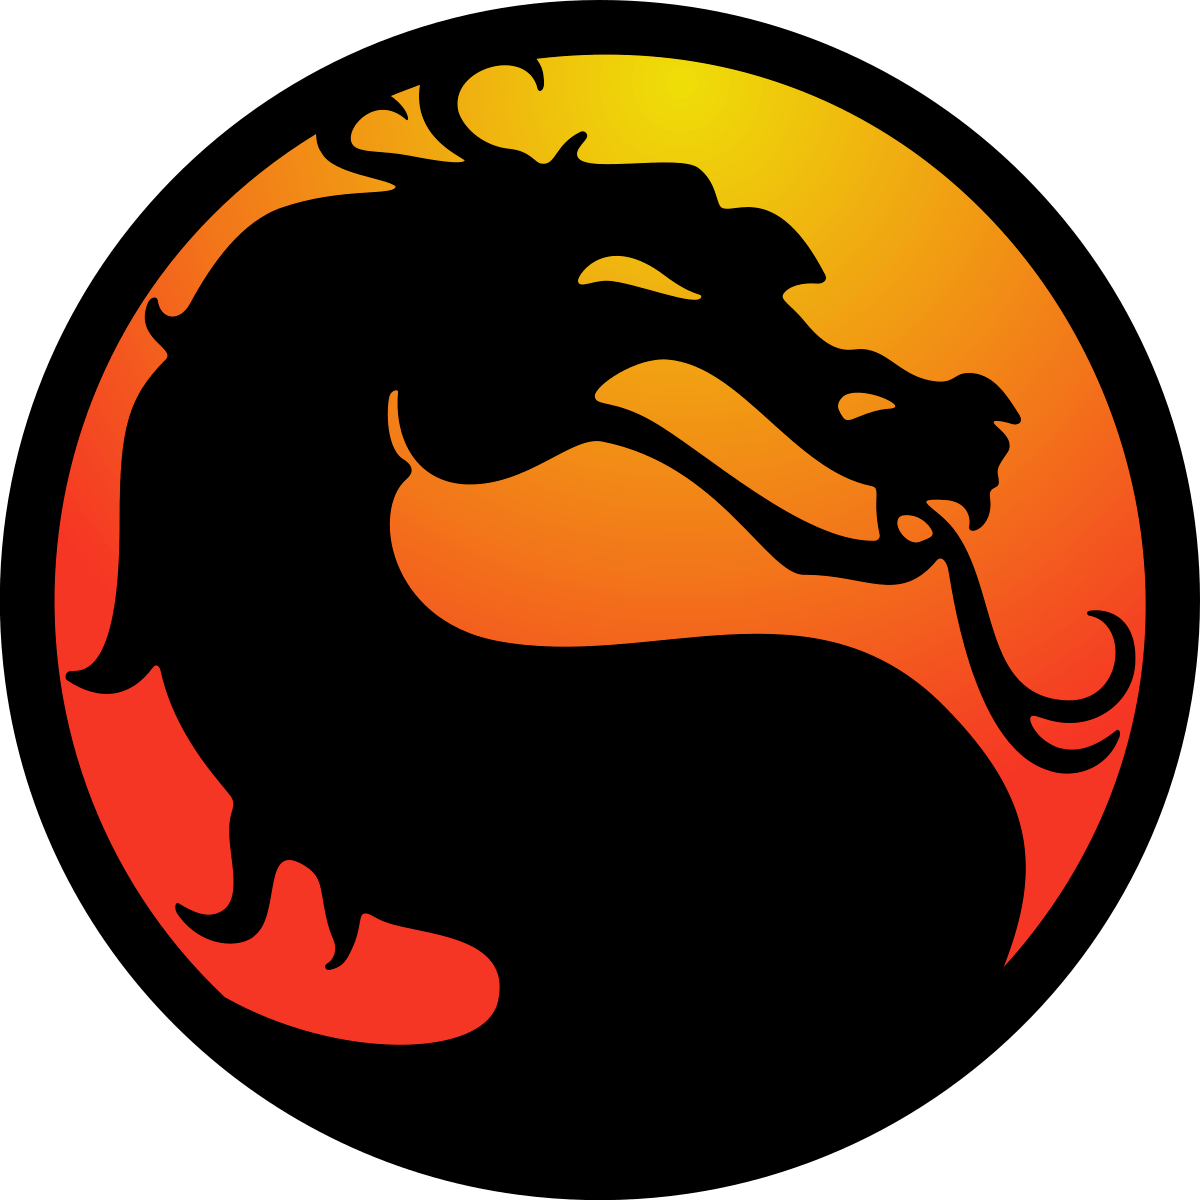 iOSGods Mortal Kombat game icon